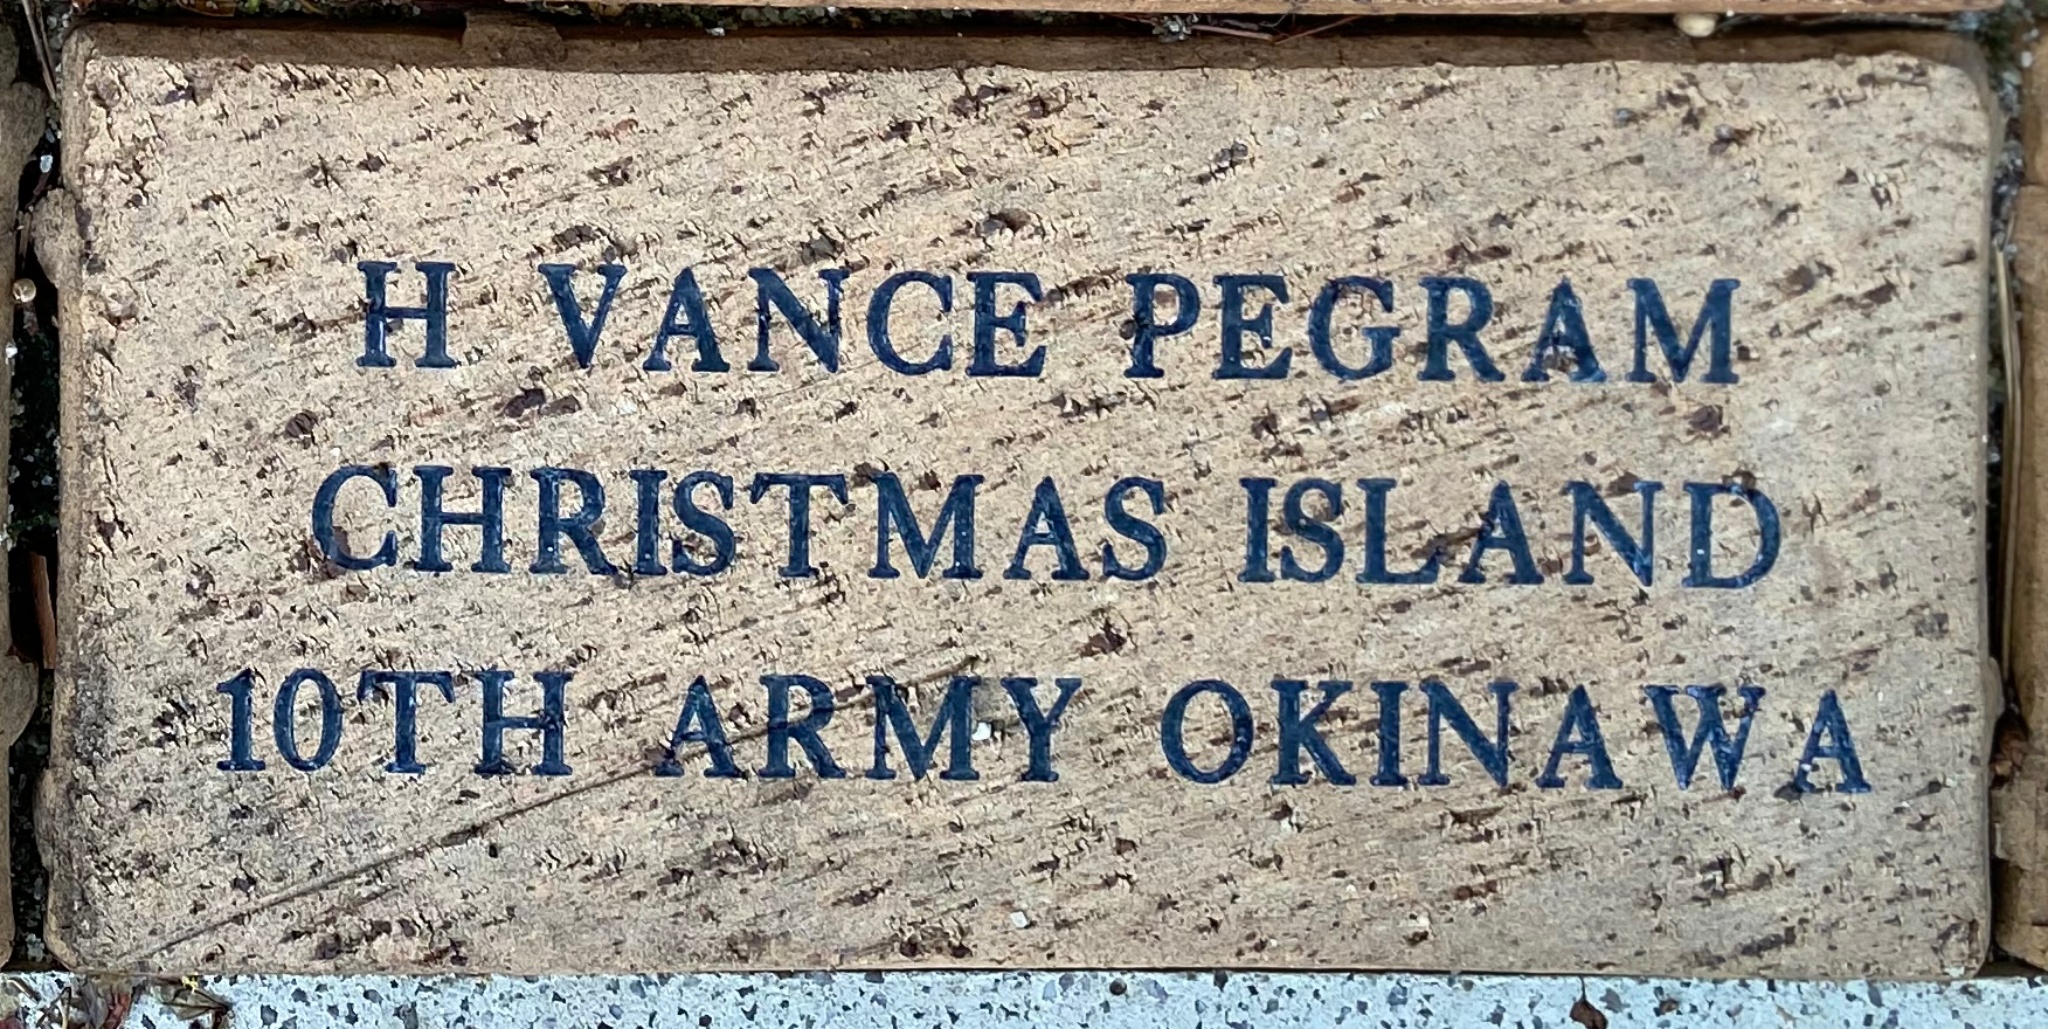 H VANCE PEGRAM CHRISTMAS ISLAND 10TH ARMY OKINAWA